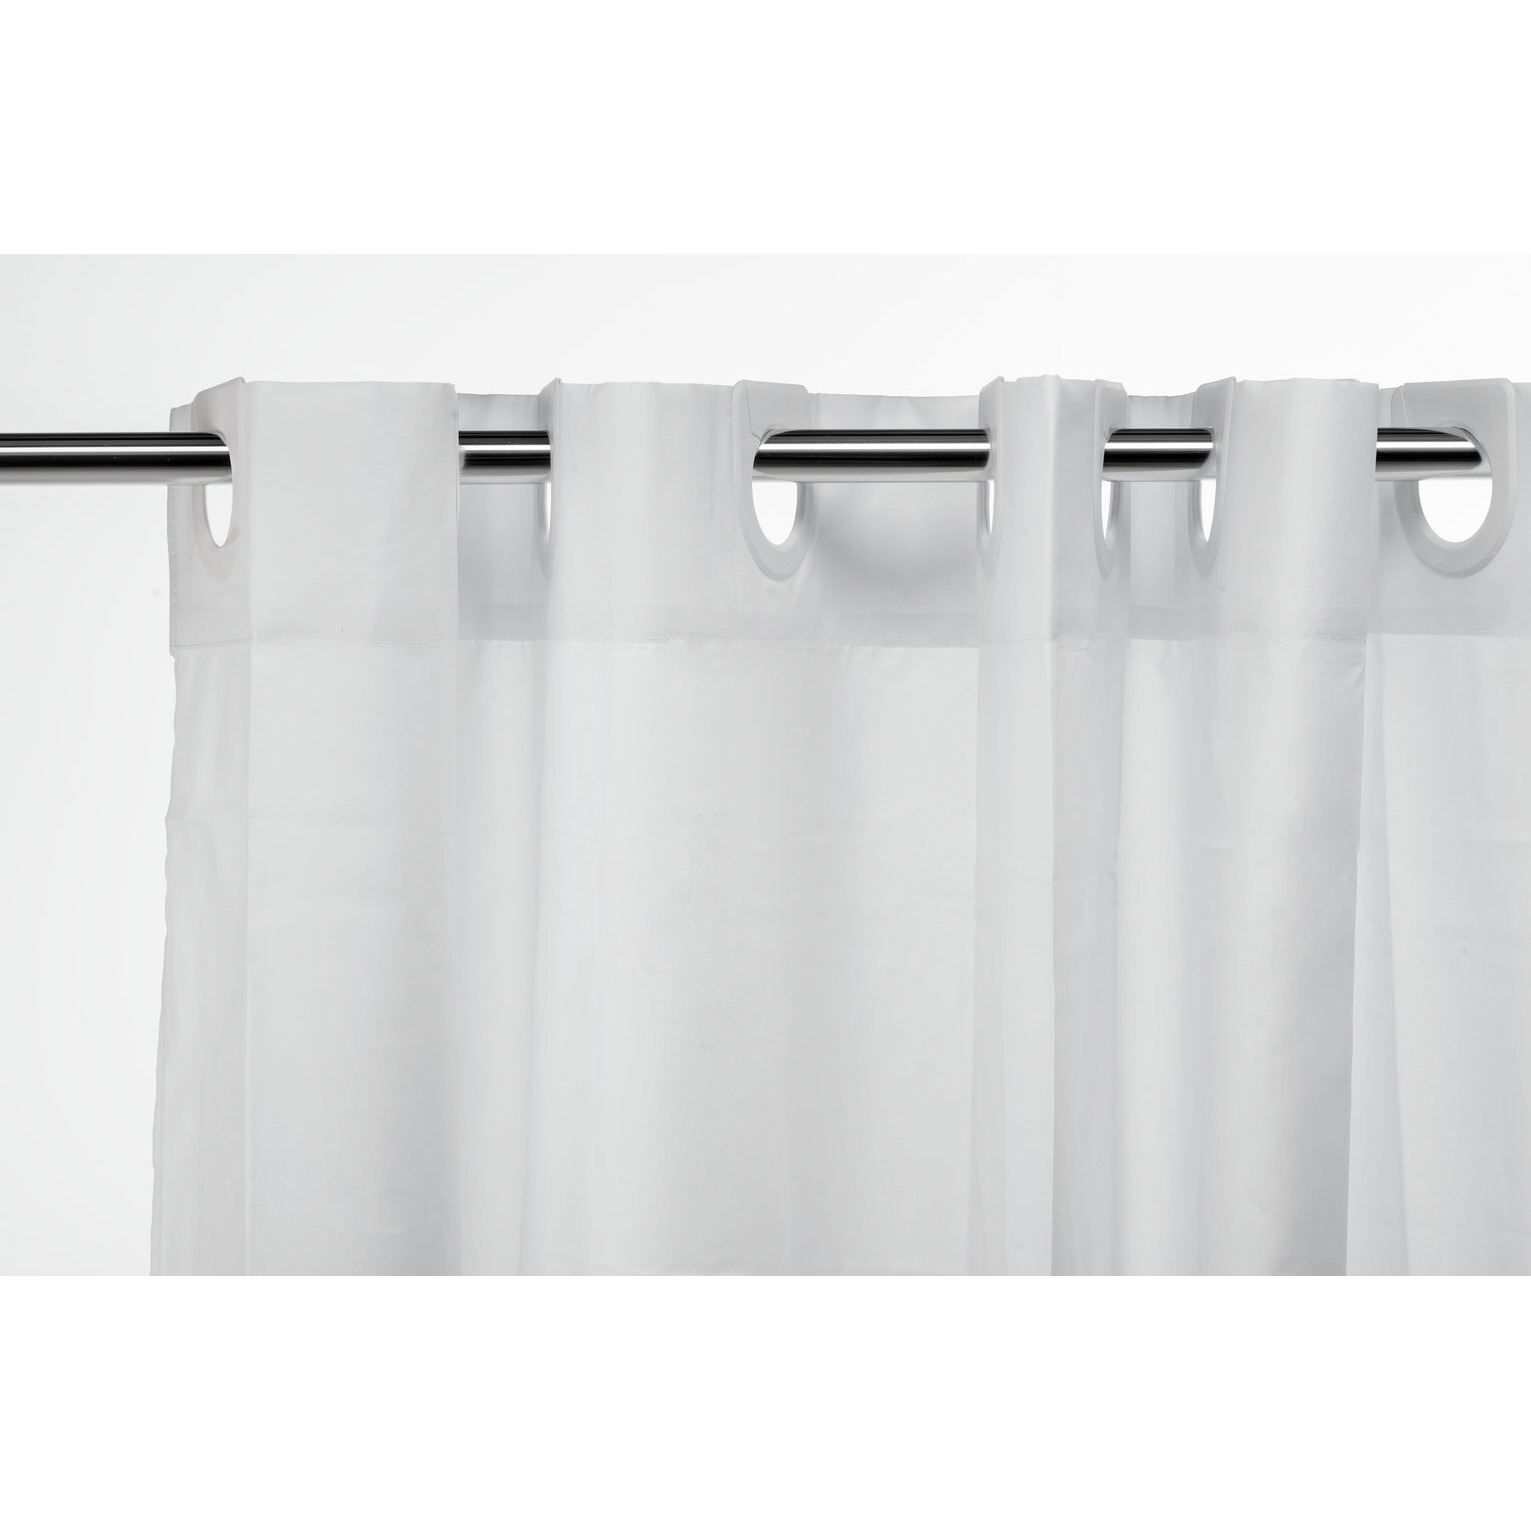 Croydex Hookless Shower Curtain Plain - White. - image 1